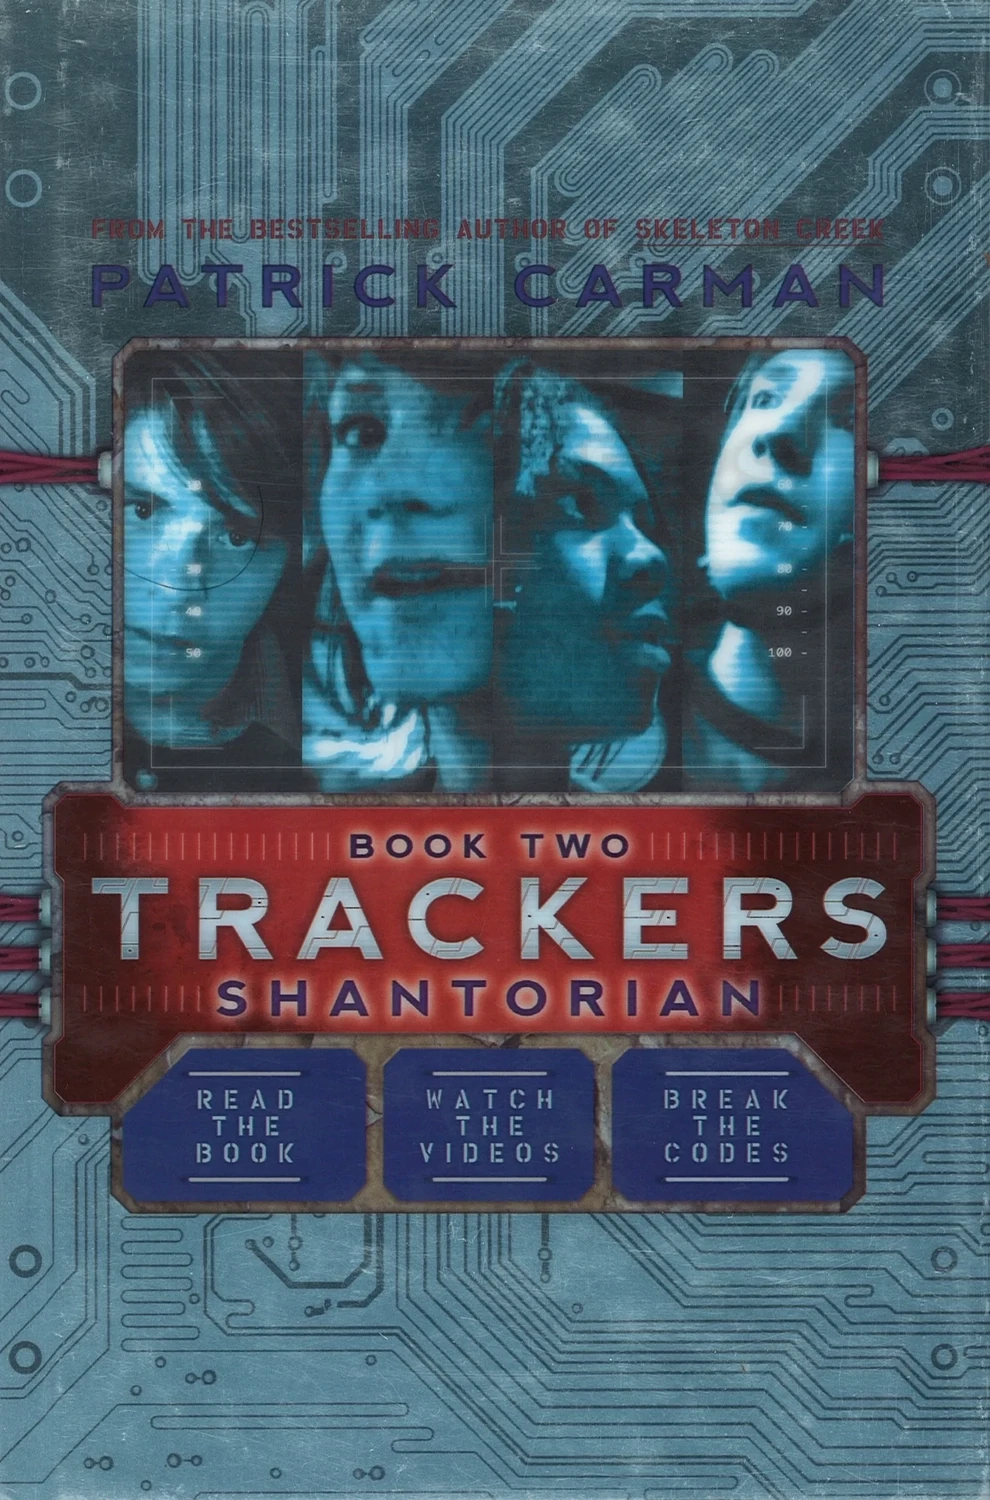 Shantorian (Trackers, Book 2), Patrick Carman